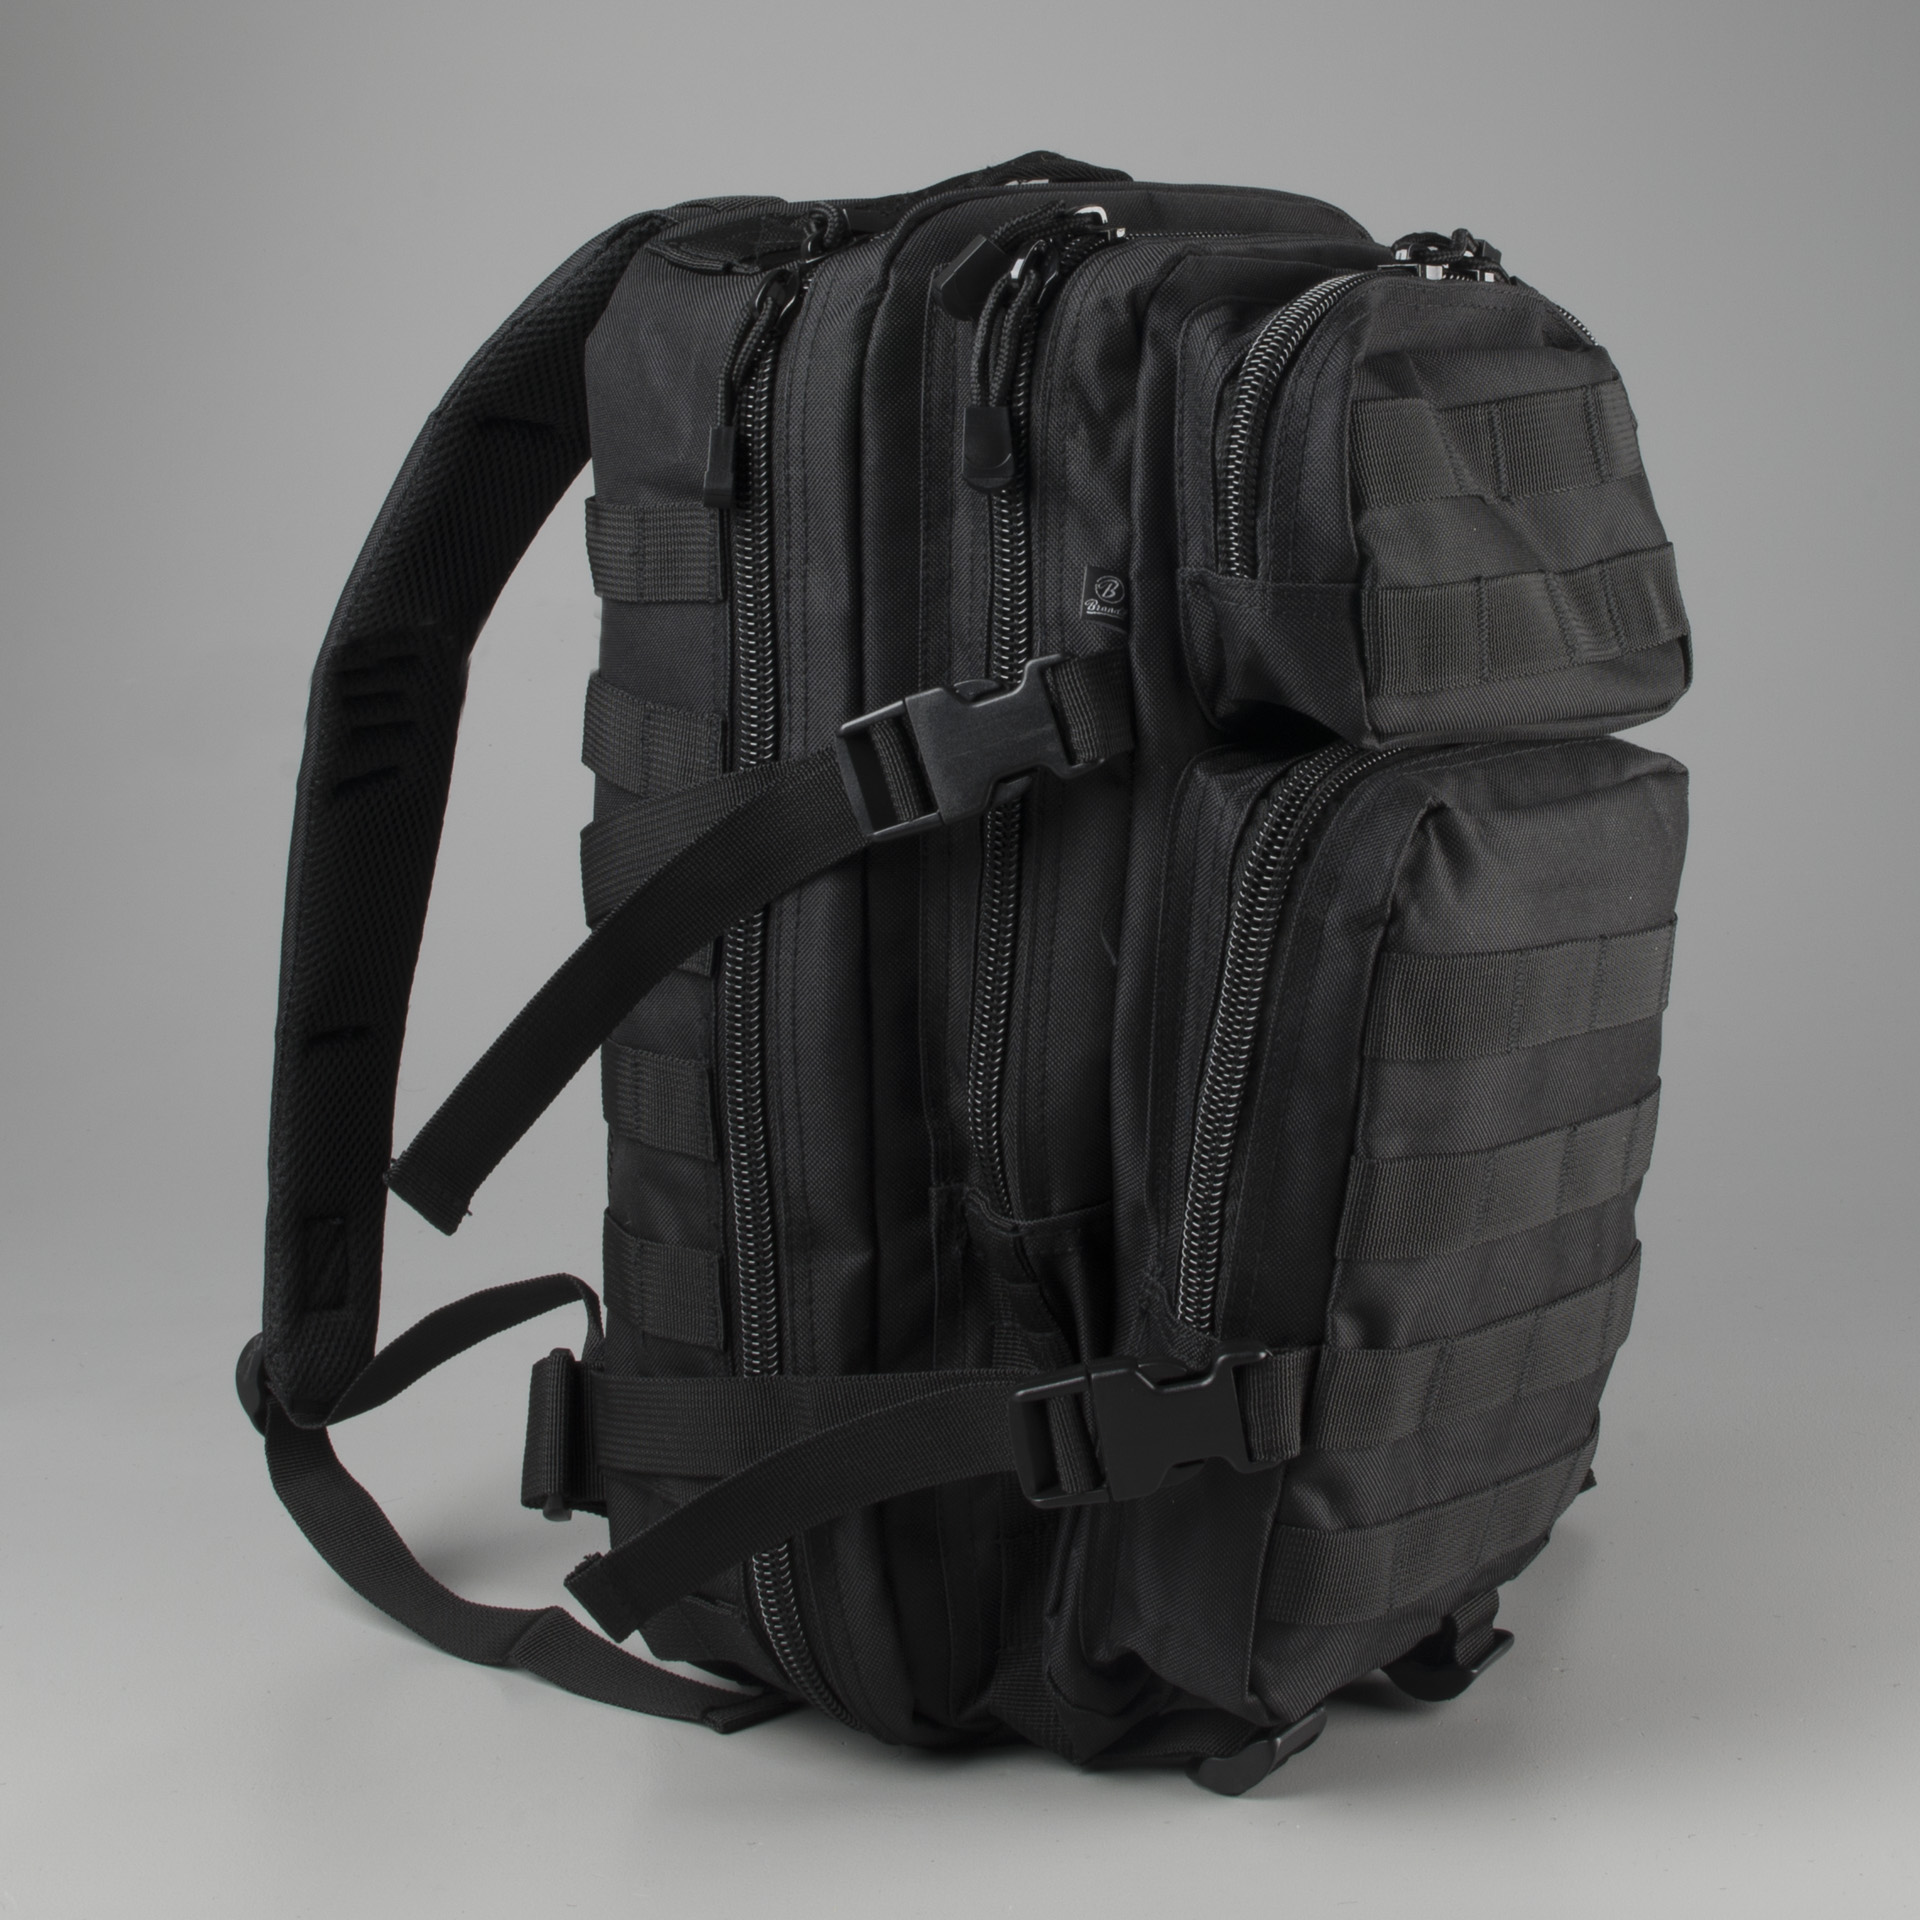 Brandit US Cooper Medium Backpack - Black 30L - Dirt cheap price